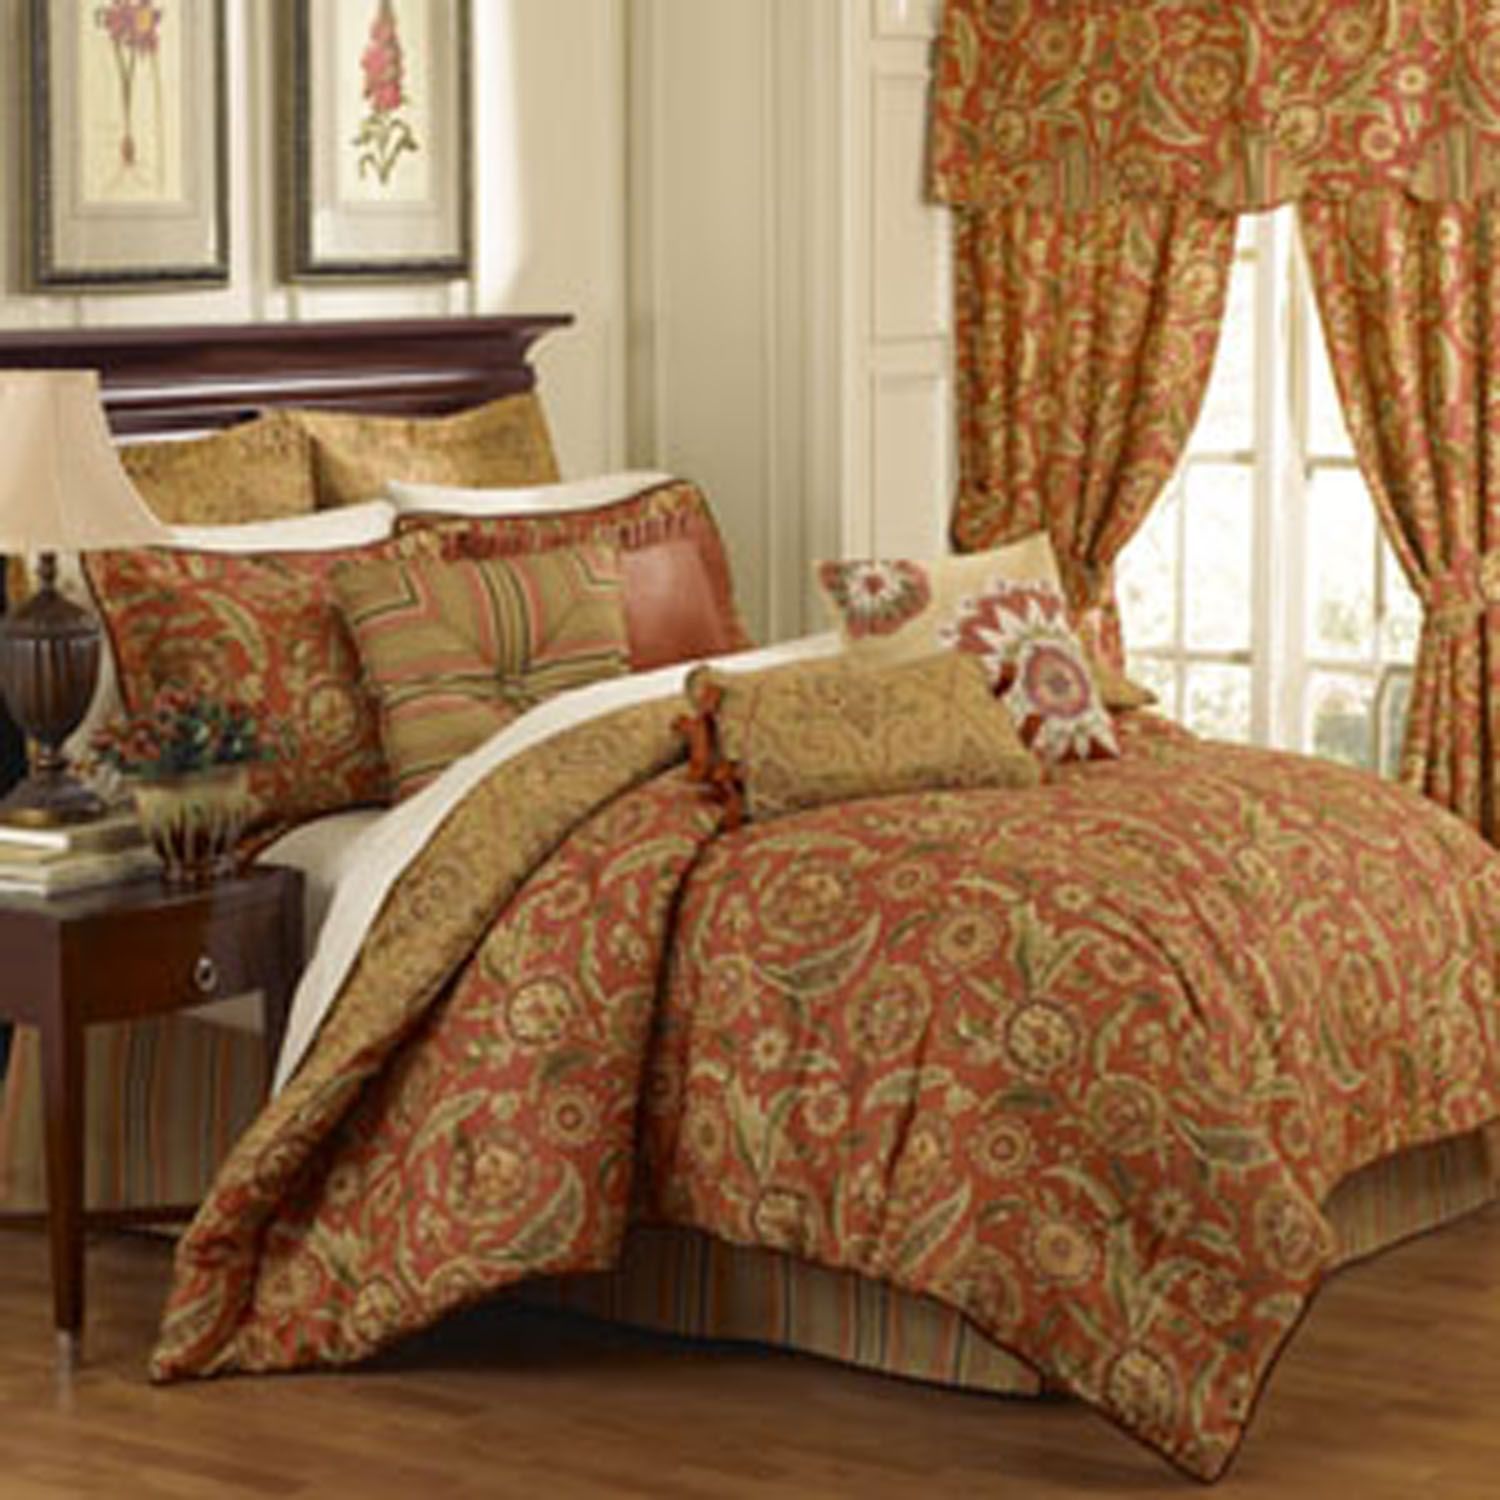 Waverly Grand Bazaar Bedding Collection: Queen Size Comforter Set Clay